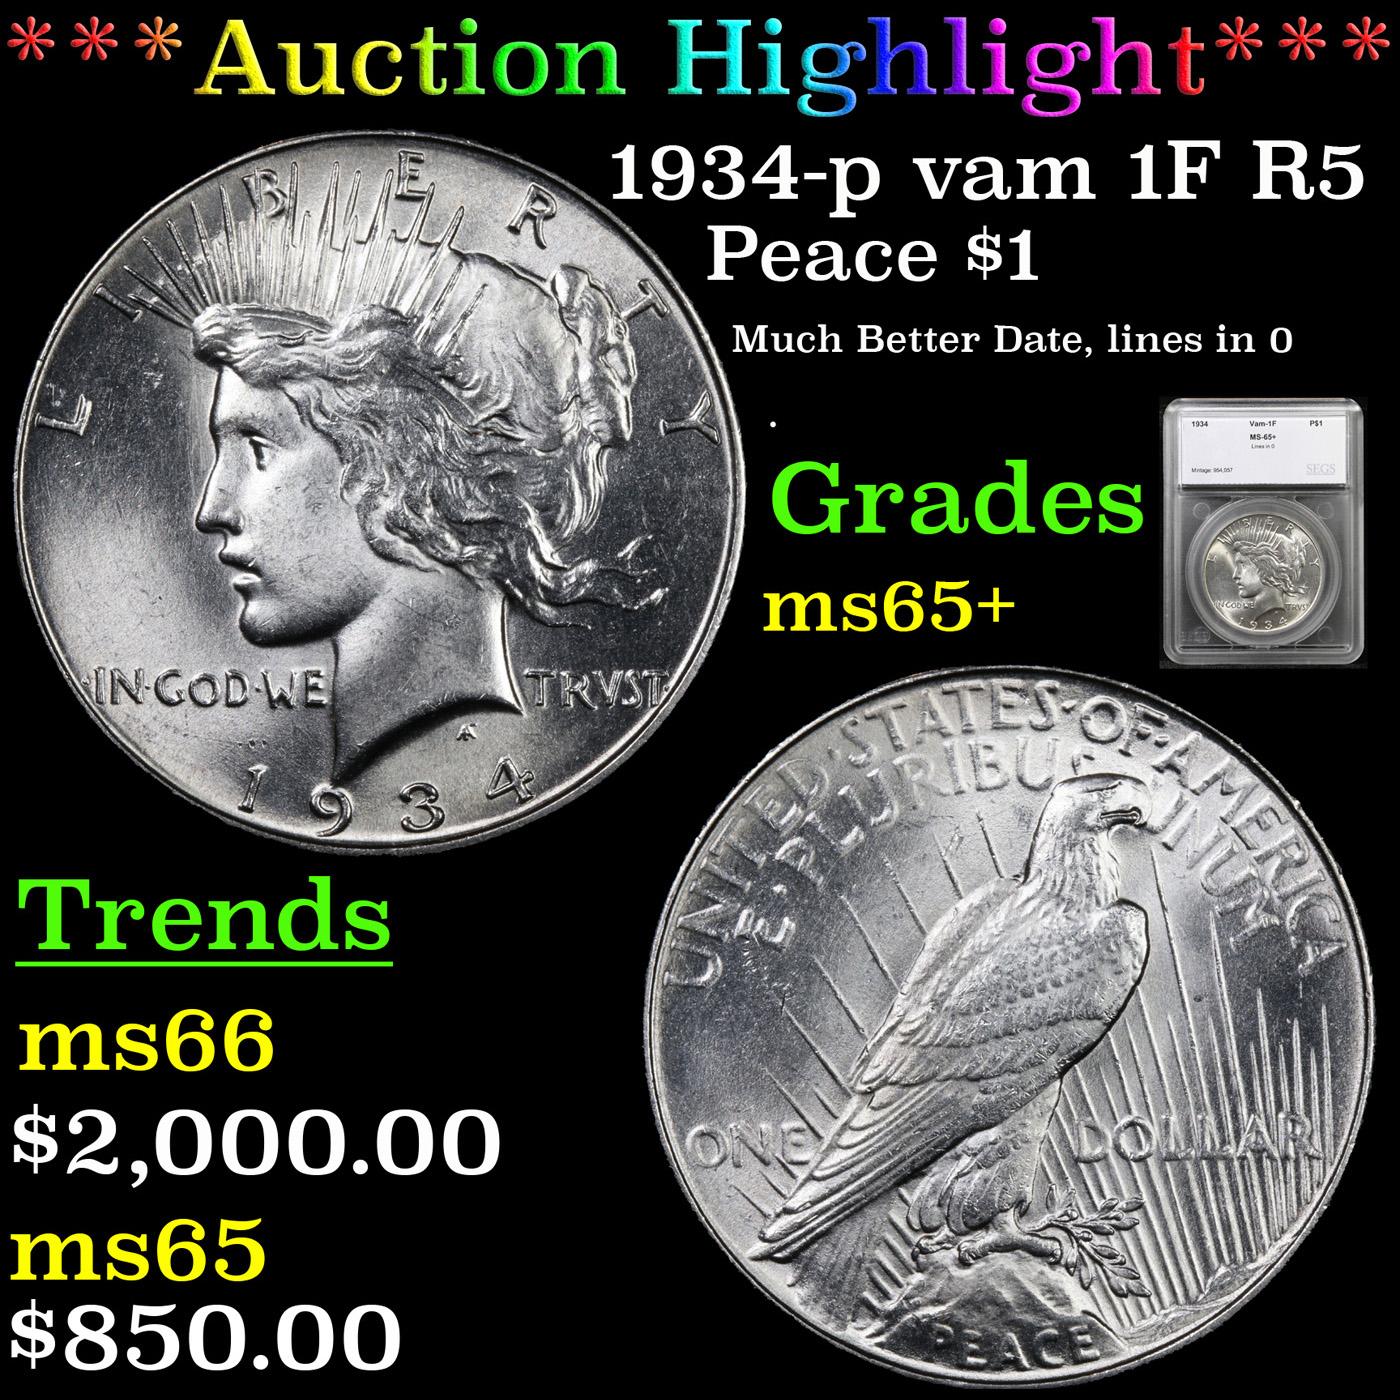 ***Auction Highlight*** 1934-p Peace Dollar vam 1F R5 $1 Graded ms65+ By SEGS (fc)